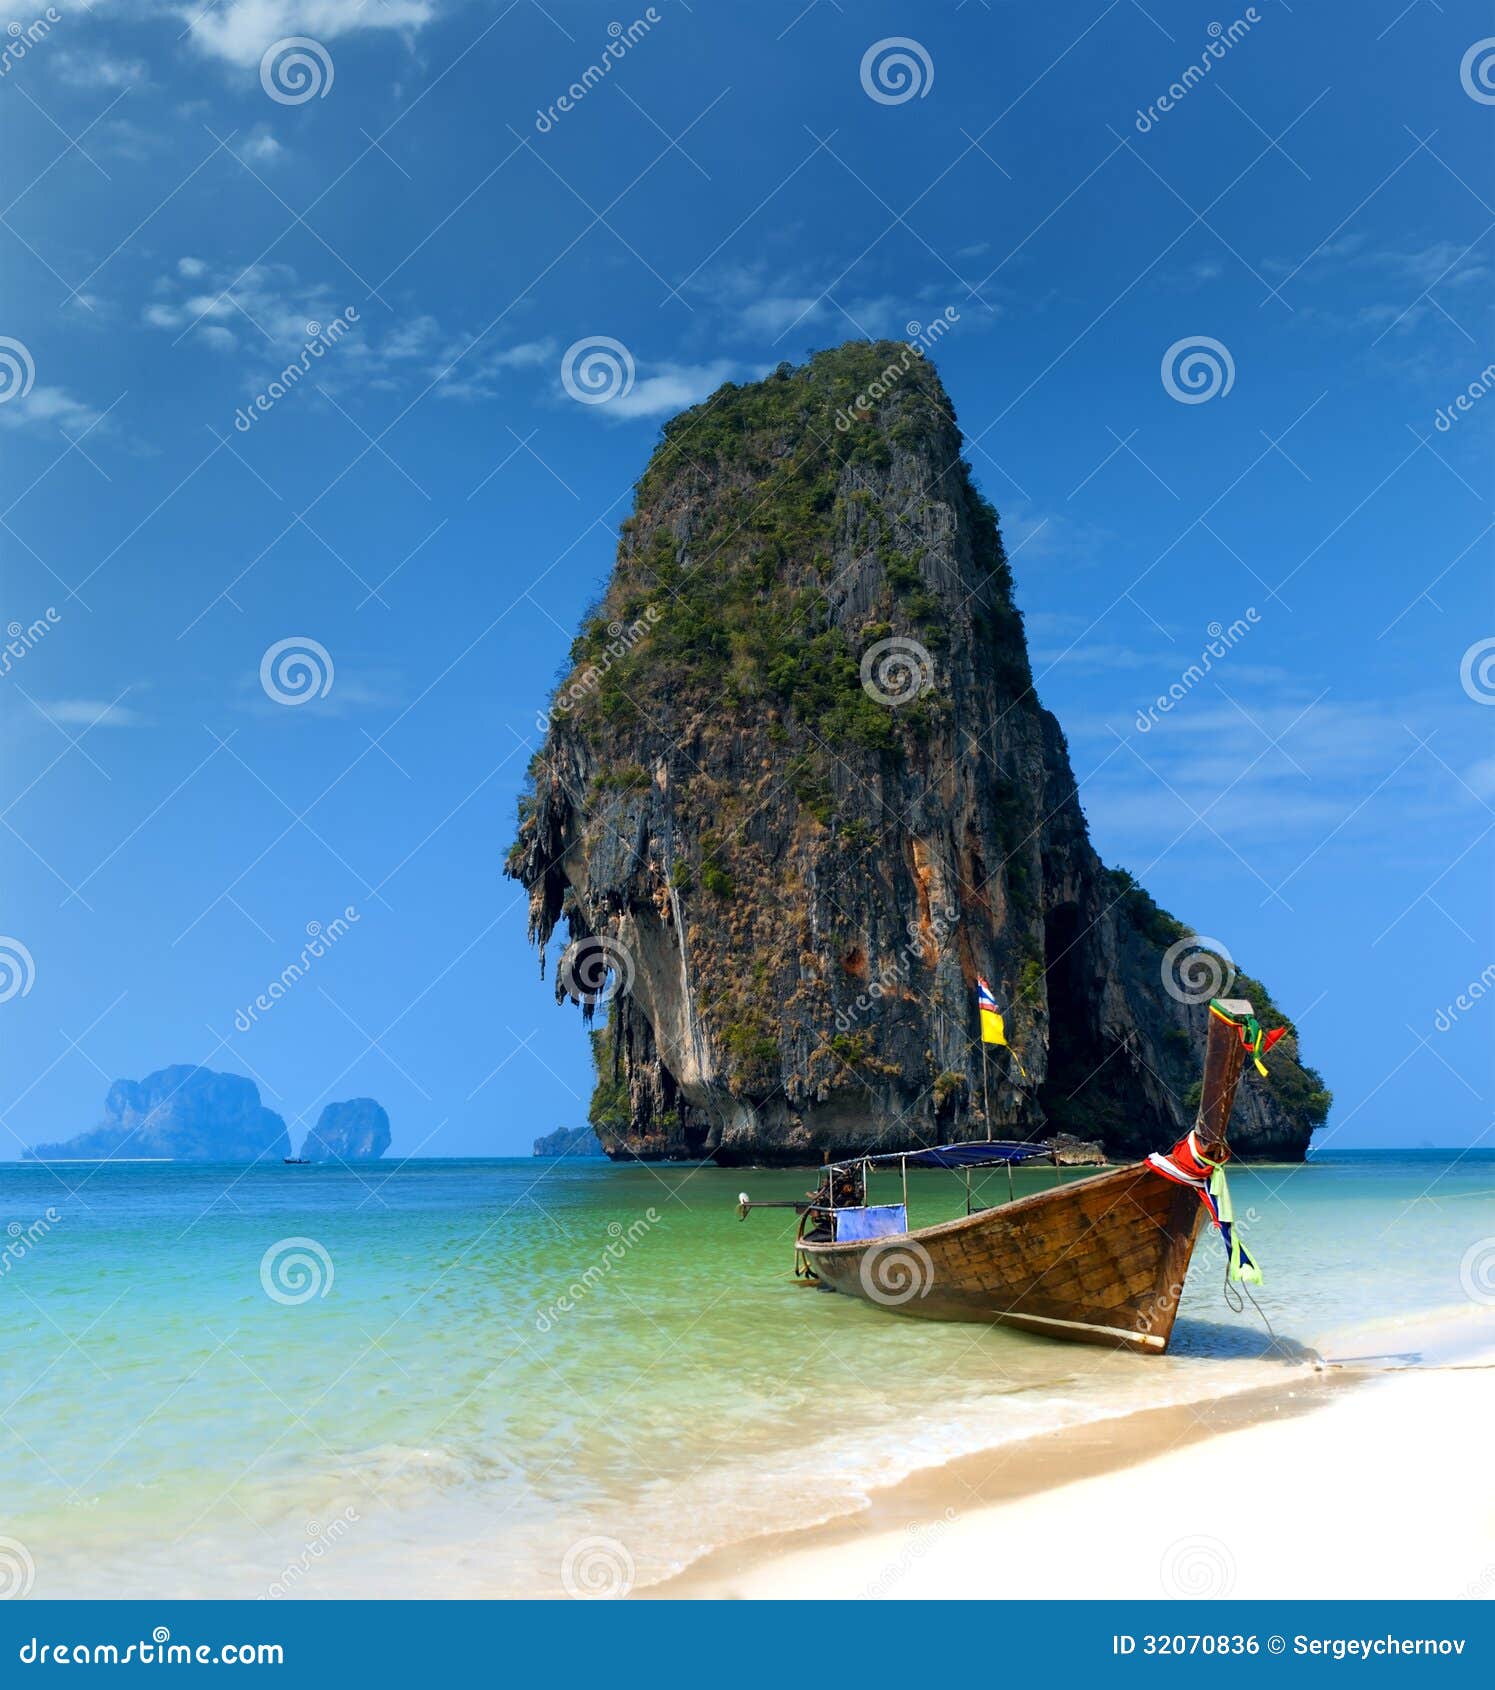 travel boat on thailand island beach. tropical coast asia landscape background